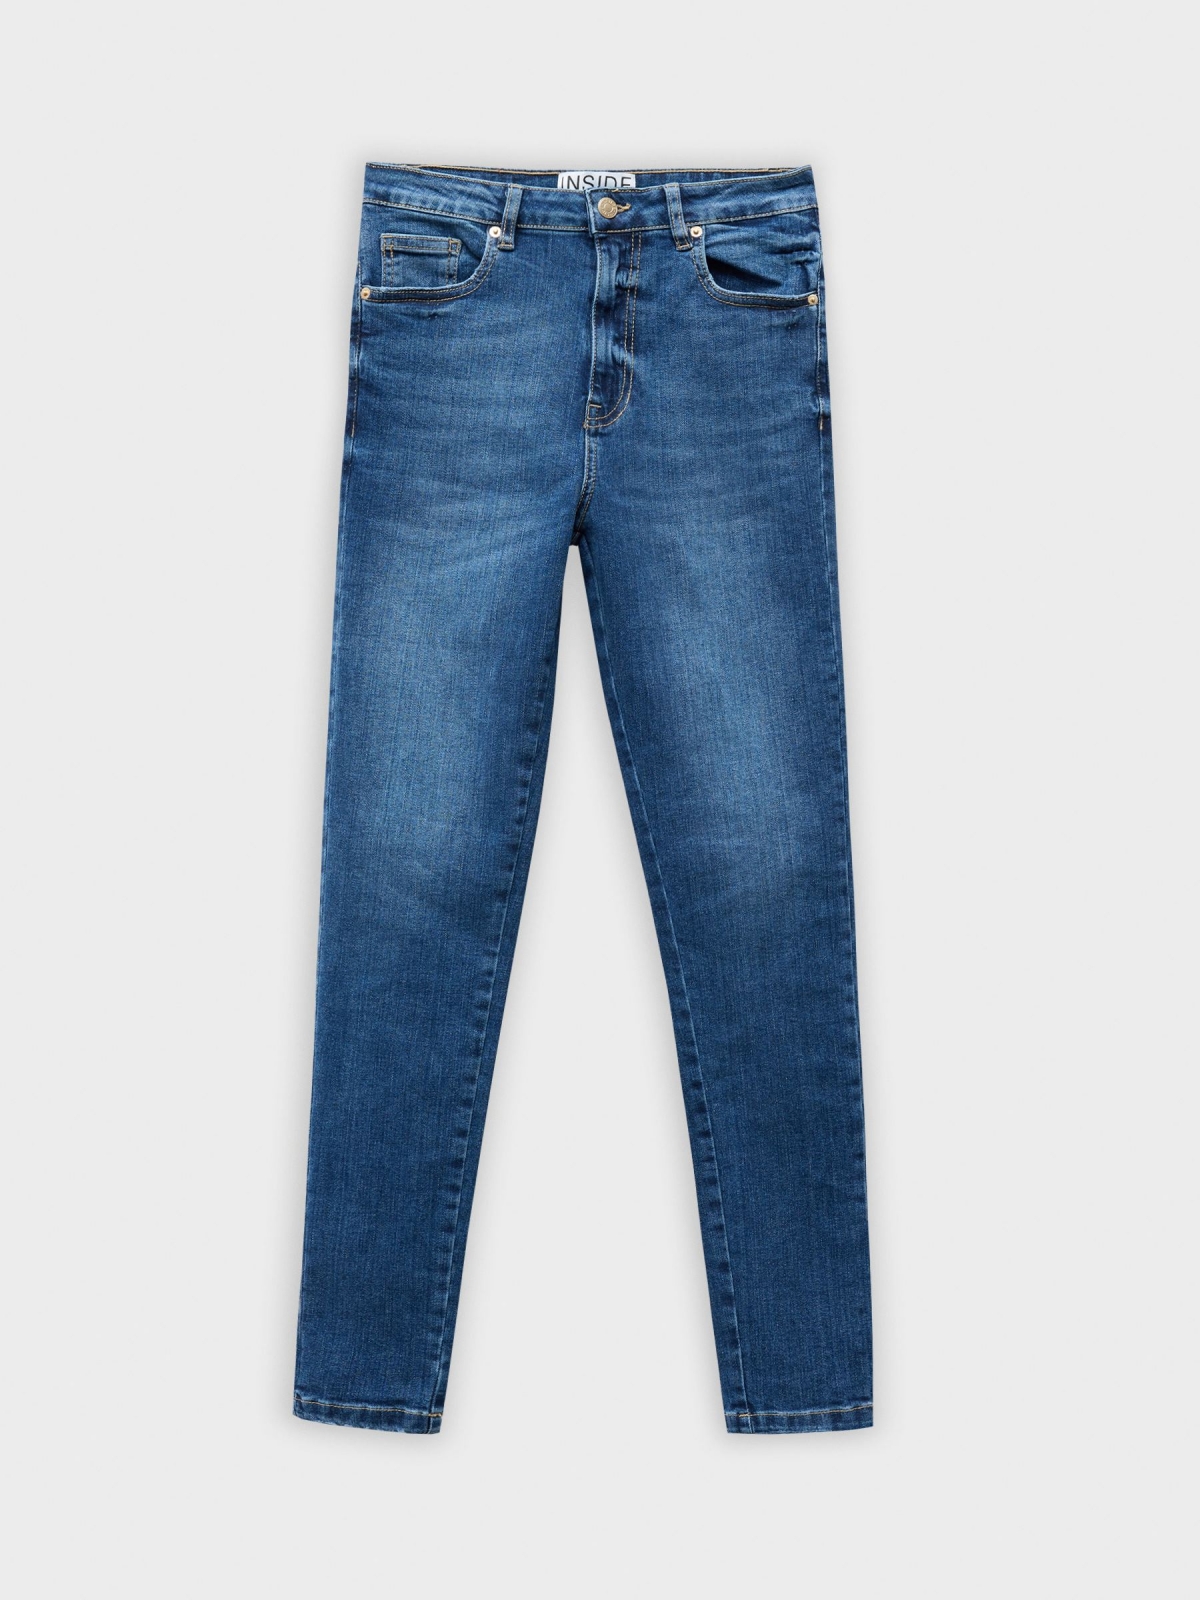  Jeans skinny tiro alto azul